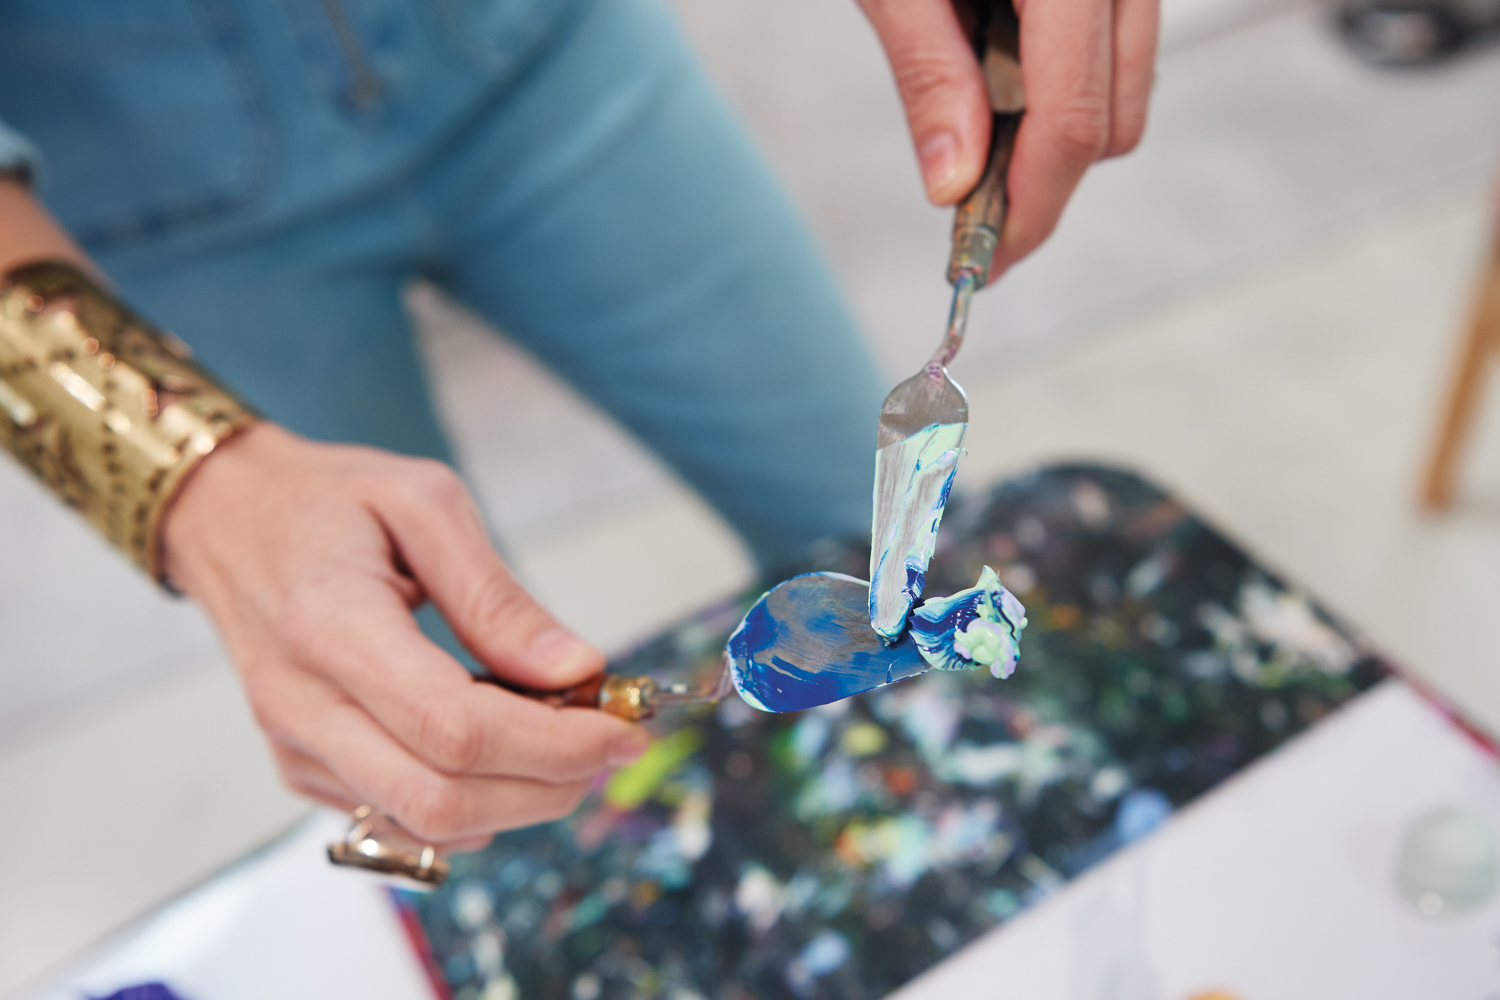 artist sculpting oil paints on palette knife